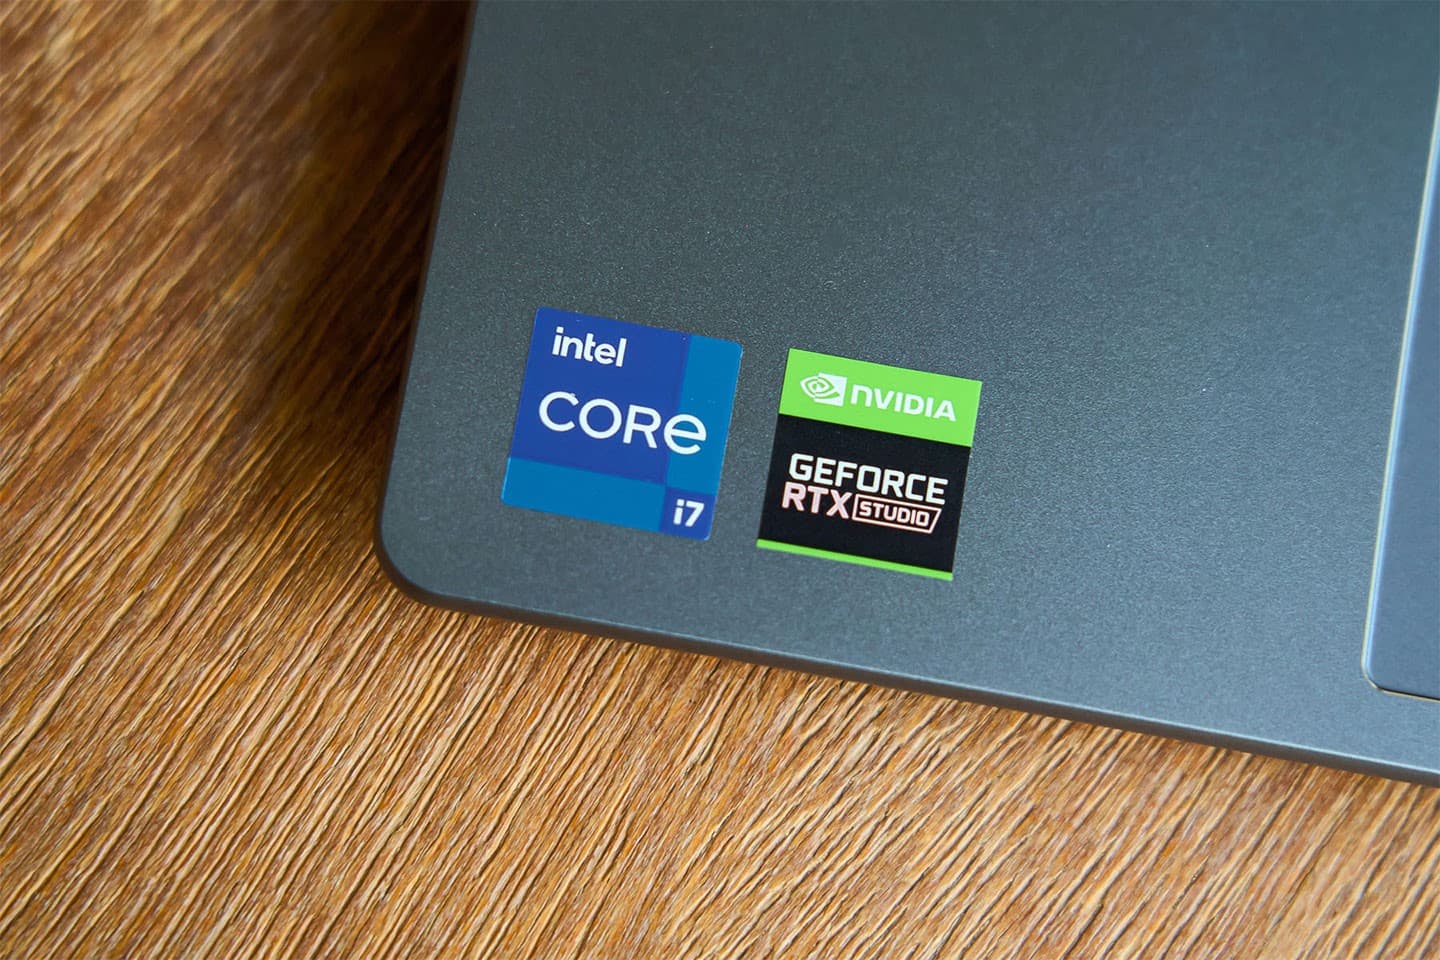 Yoga Slim 7i Pro X 載第 12 代 Intel Core i7 處理器與 NVIDIA GeForce RTX 3050 記型電腦版 GPU 的組合，效能表現有一定的水準。